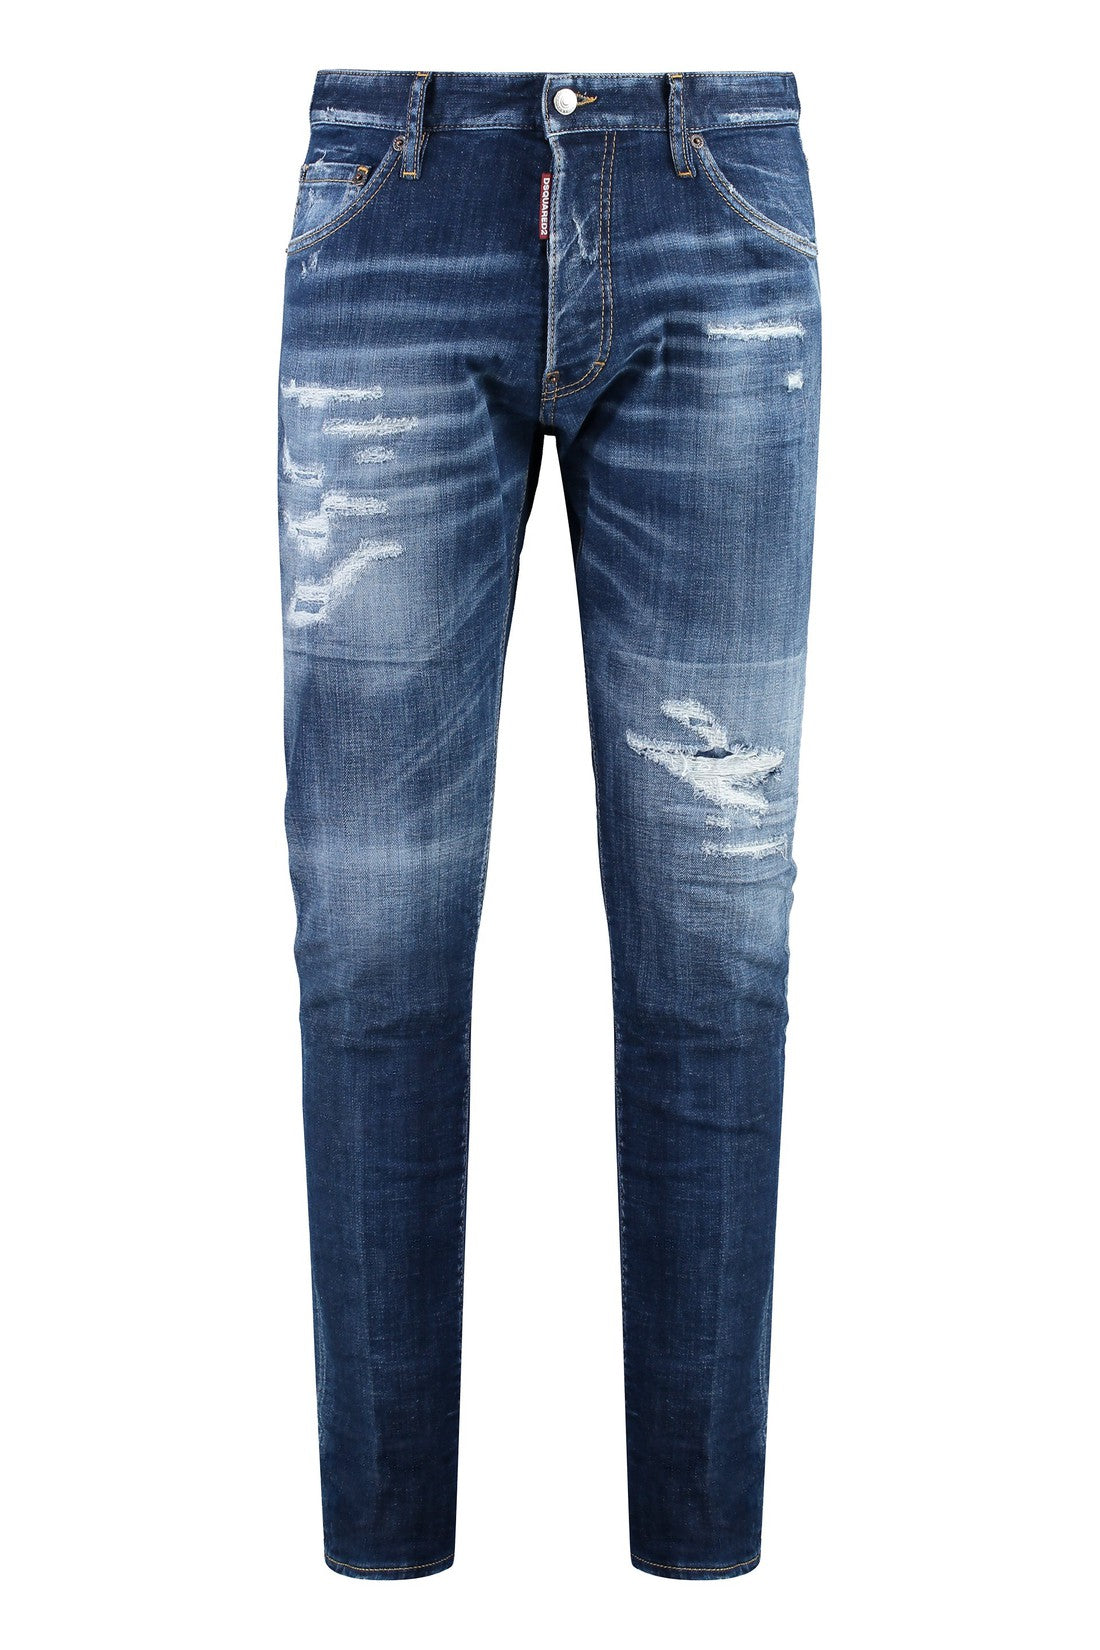 Dsquared2-OUTLET-SALE-Cool-Guy jeans-ARCHIVIST